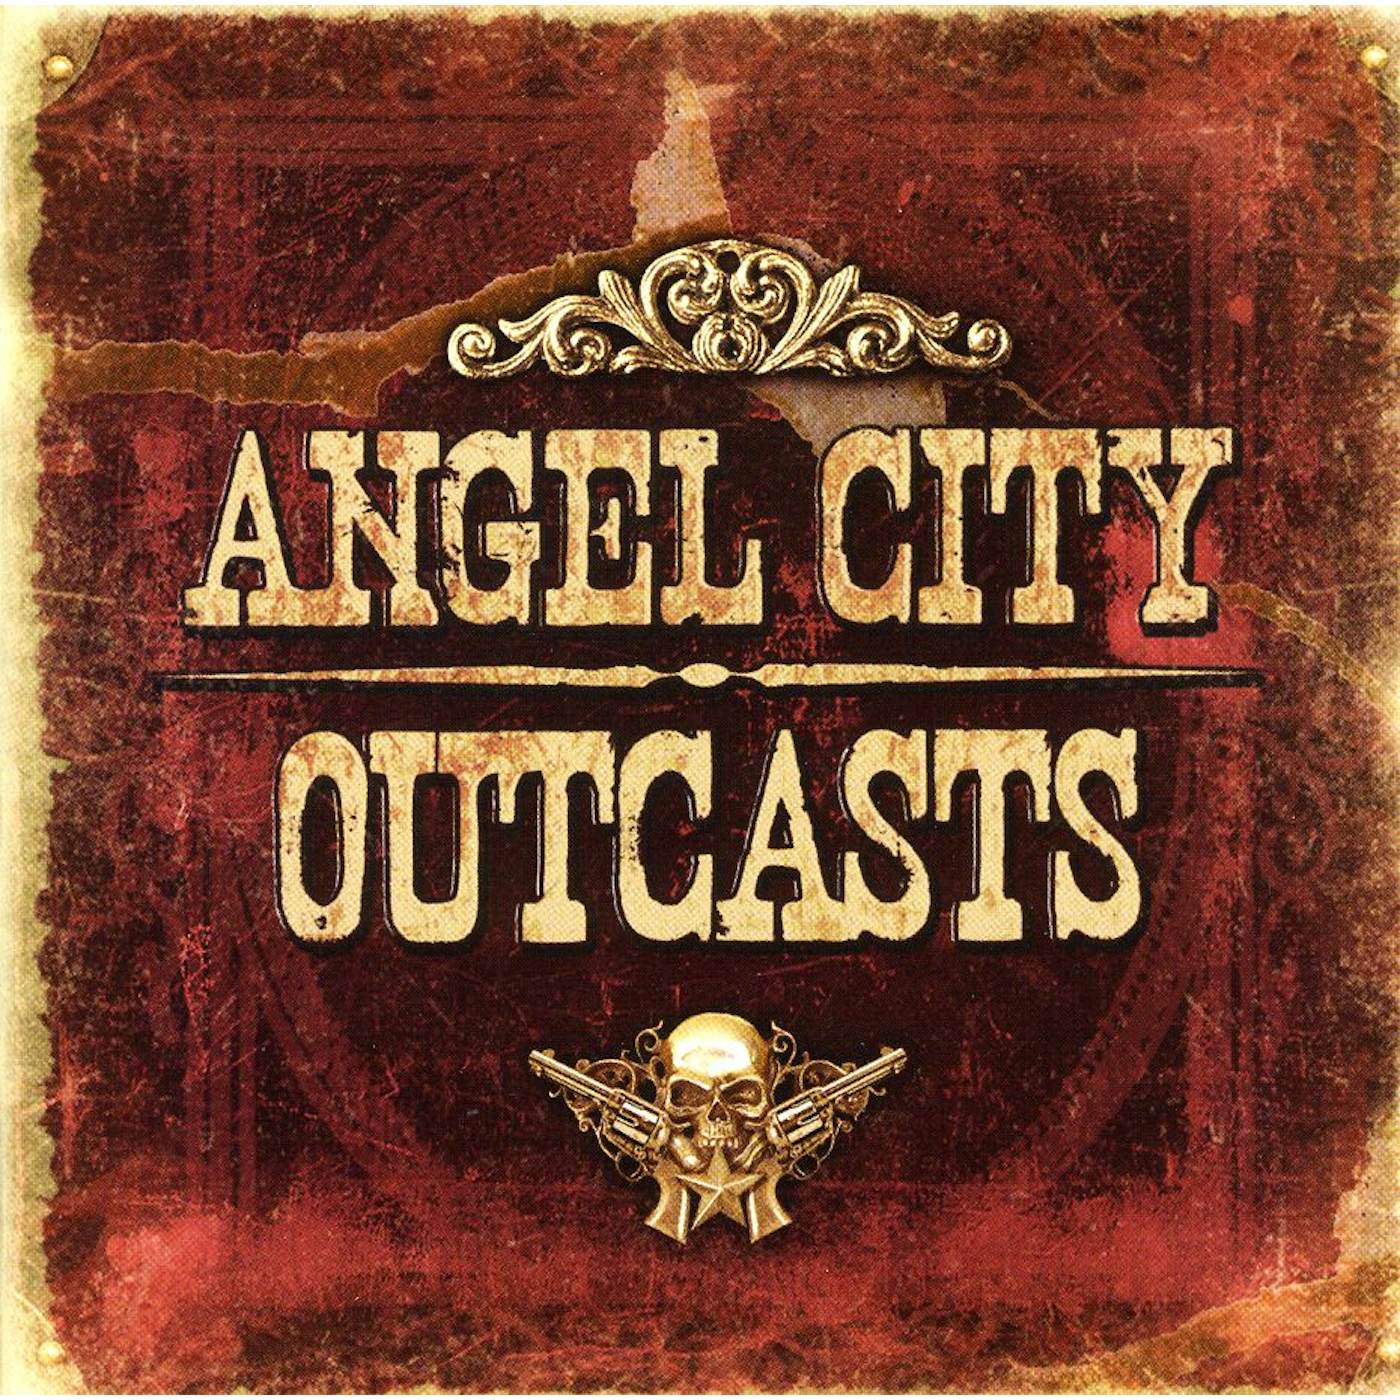 ANGEL CITY OUTCASTS CD